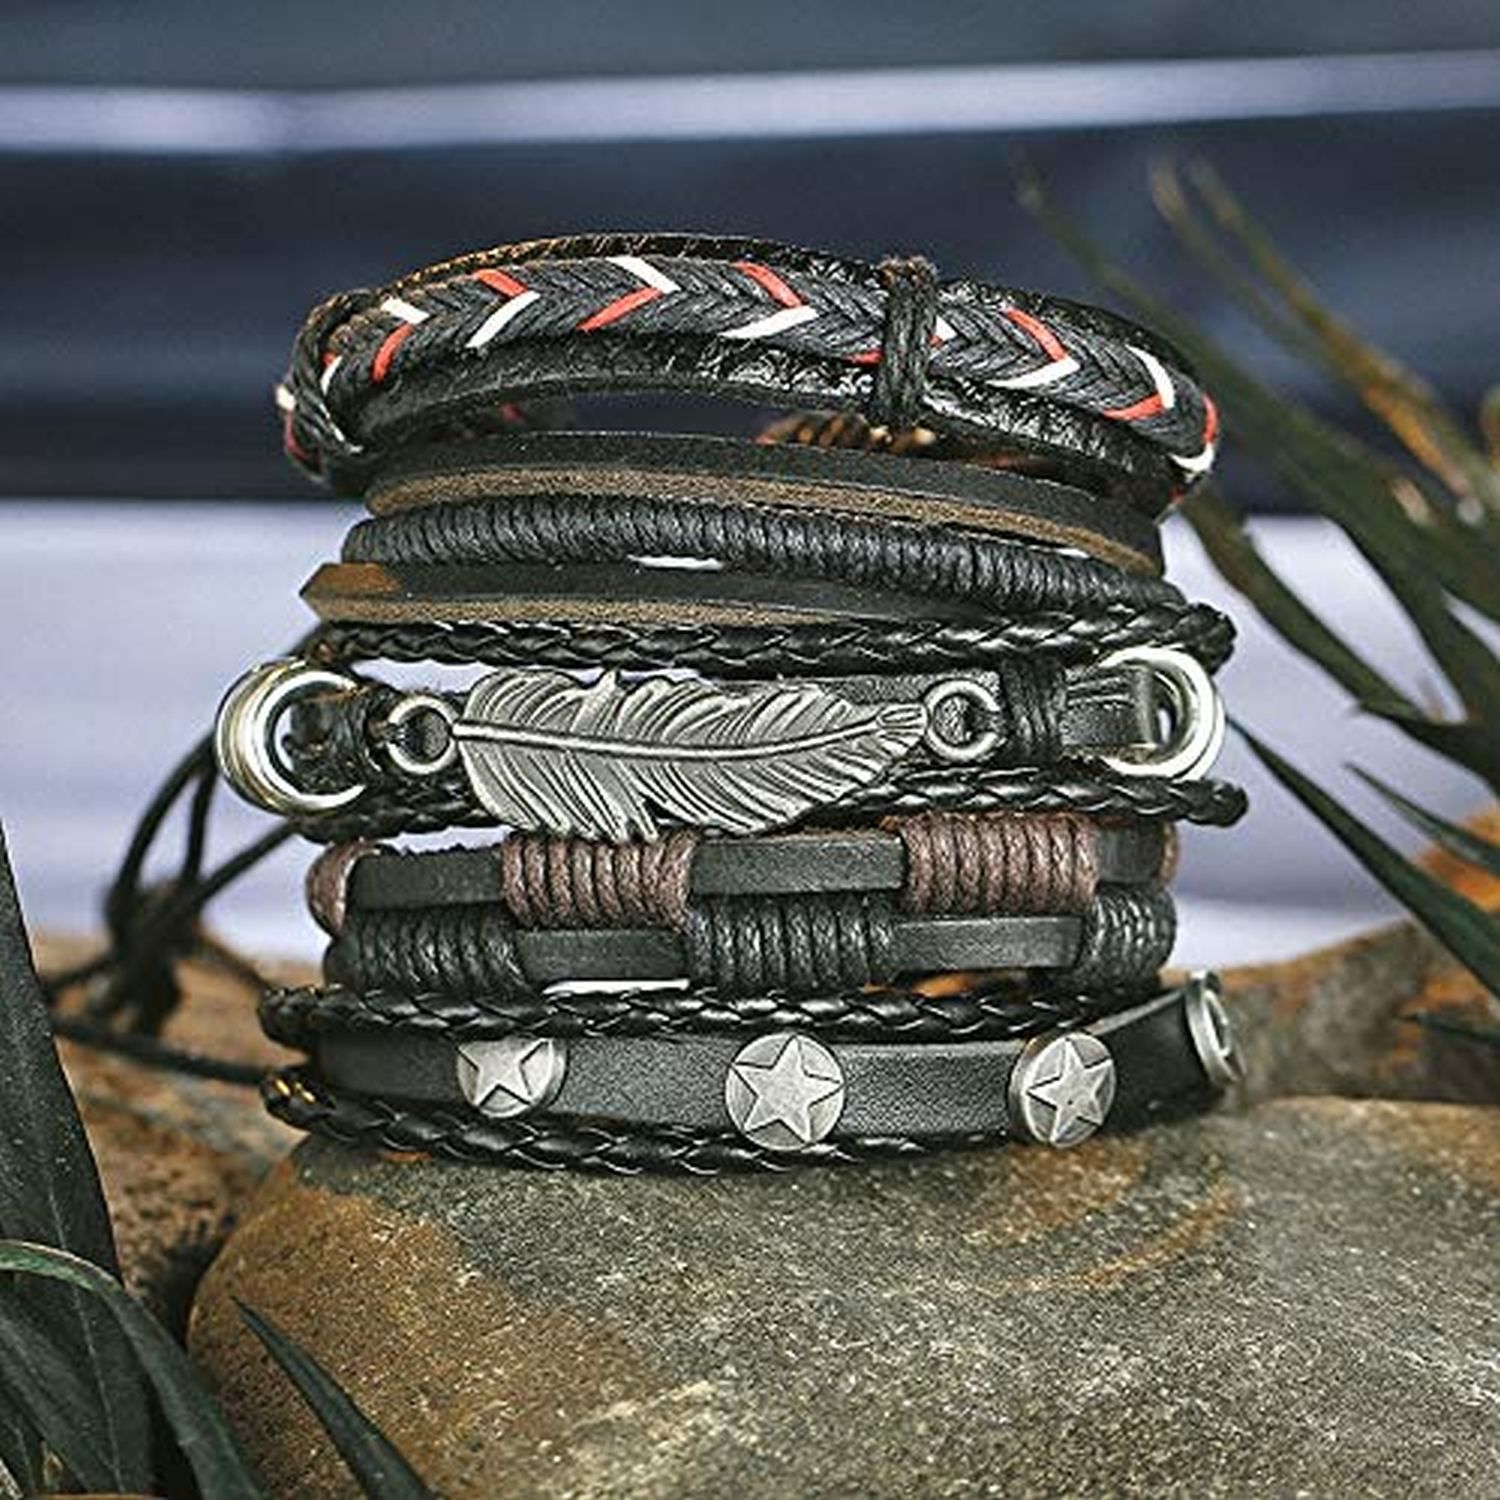     			ZIVOM Stylish Feather 100% Genuine Black Leather Wraps Casual Party Wear Skin Friendly Bracelets Pack of 5 Men Boys